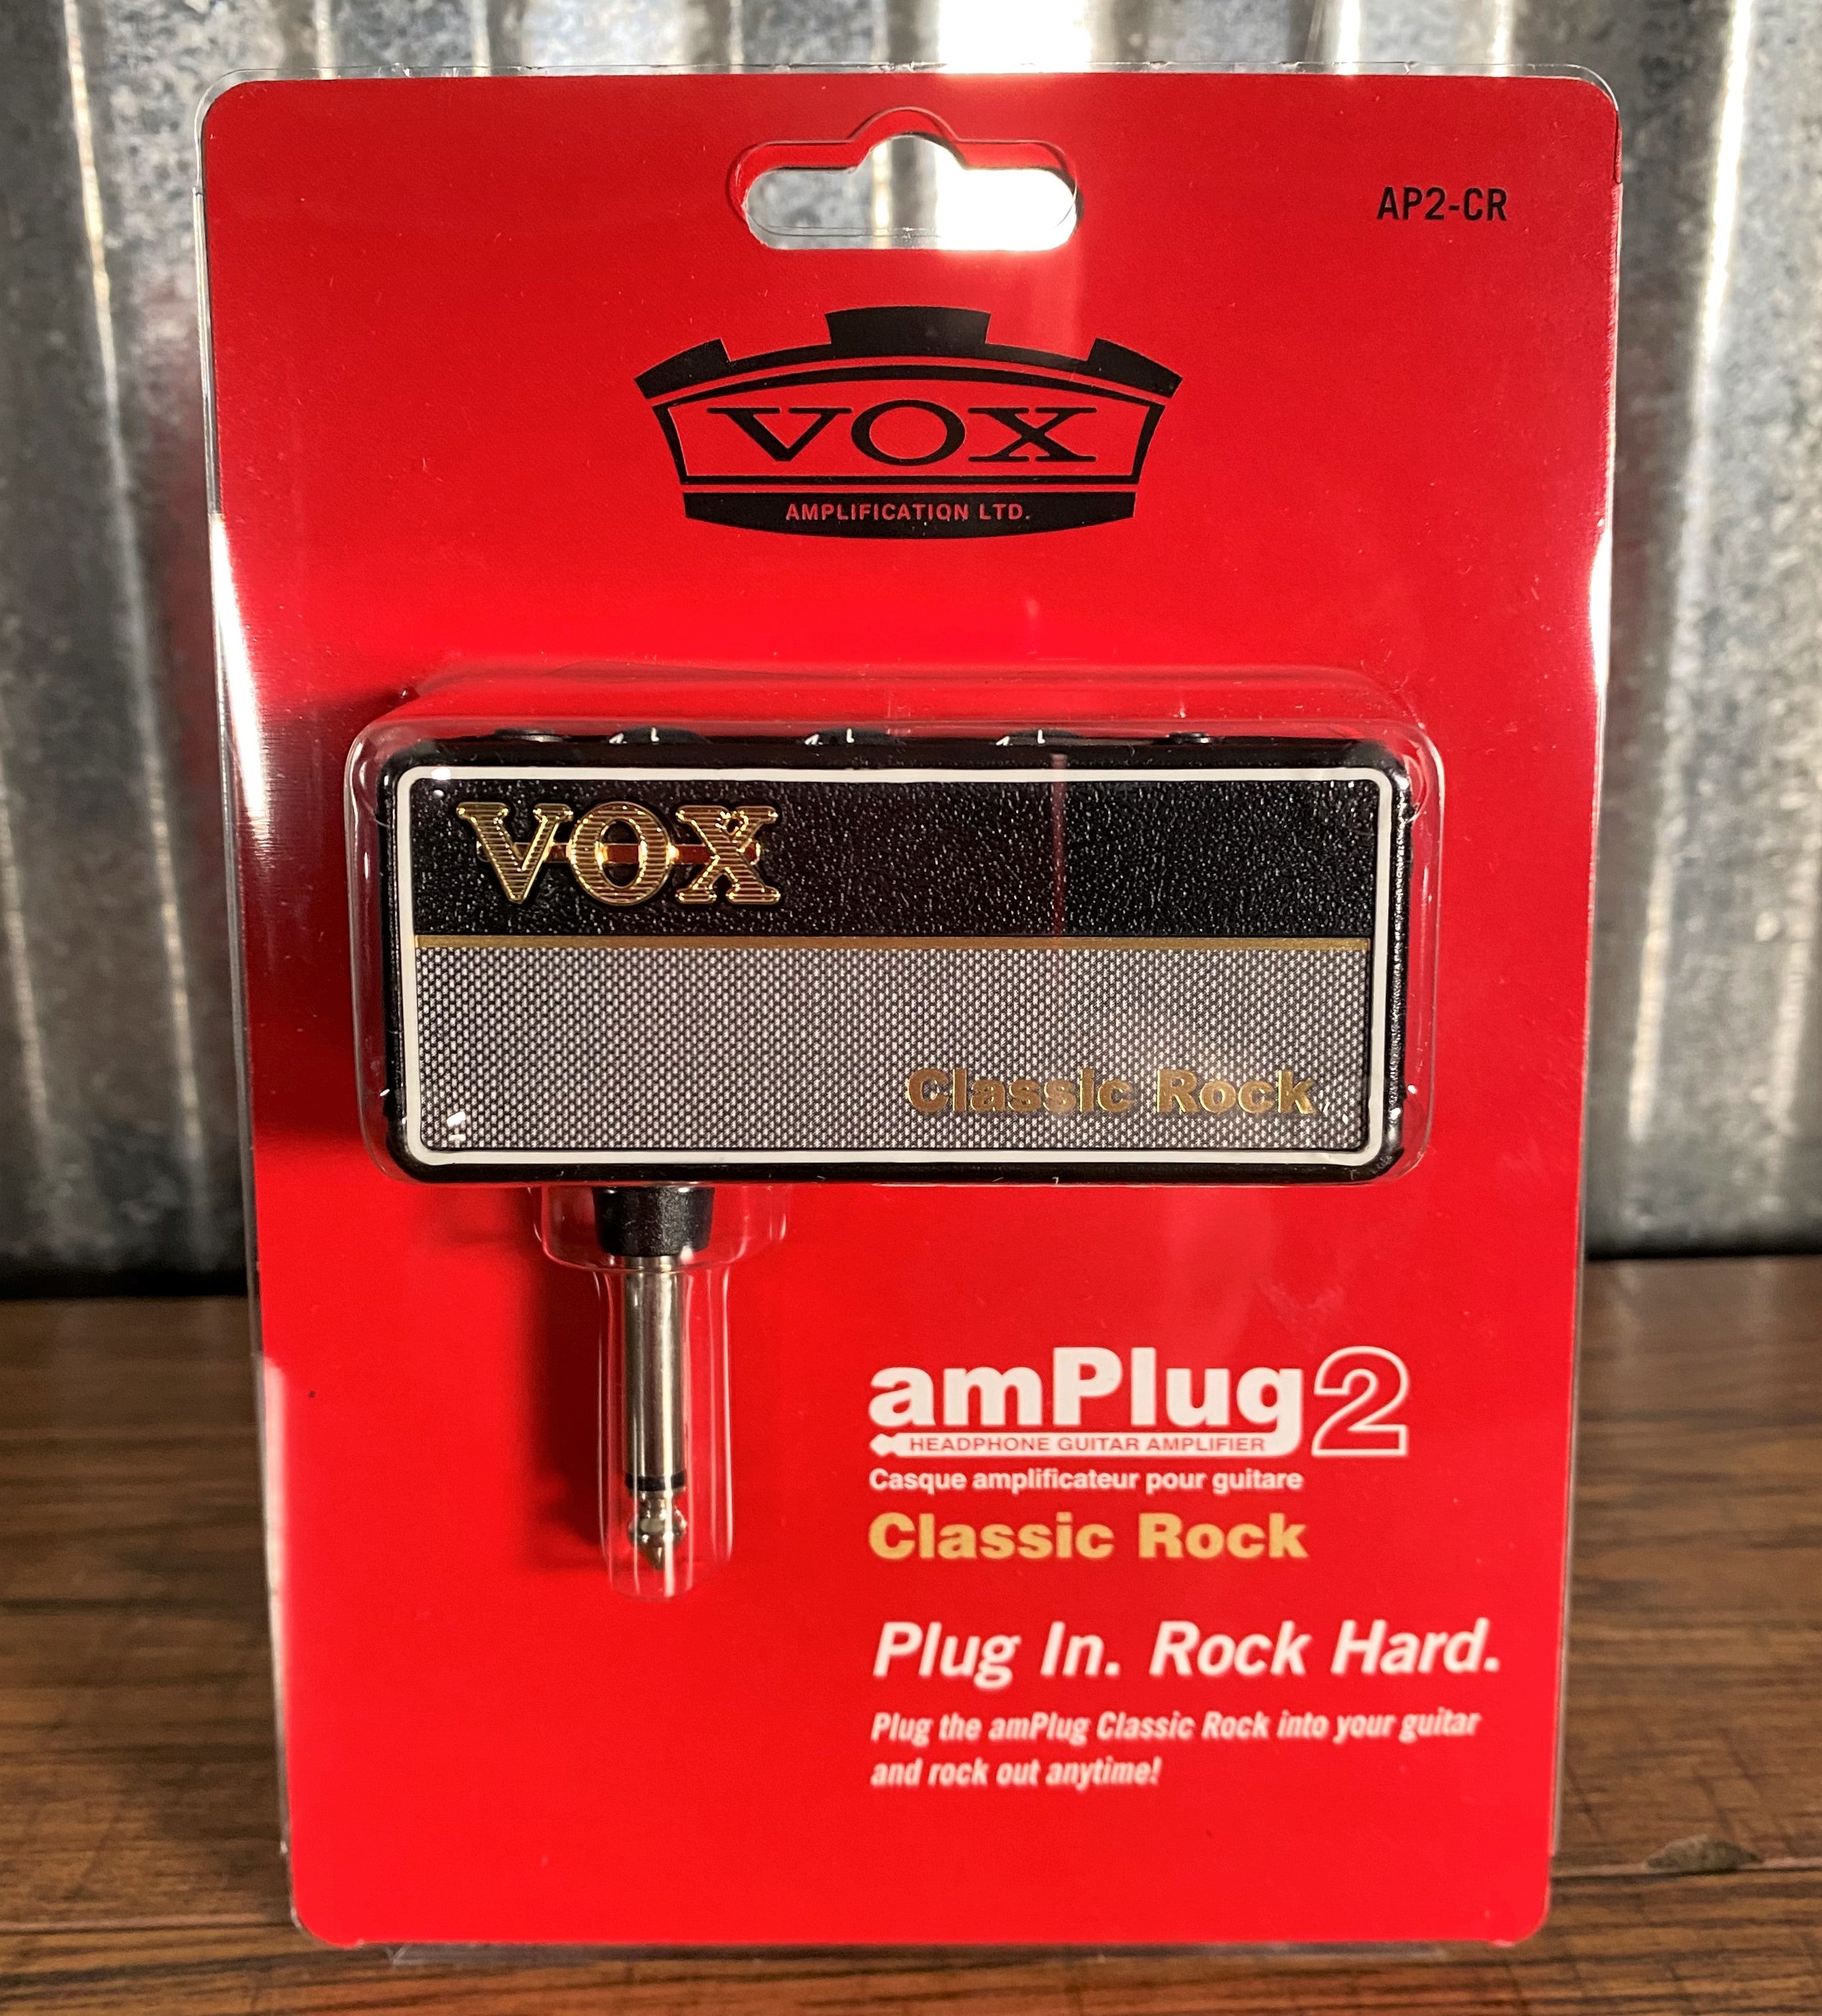 Vox amPlug G2 Classic Rock Headphone Guitar Amplifier AP2CR - Adorama